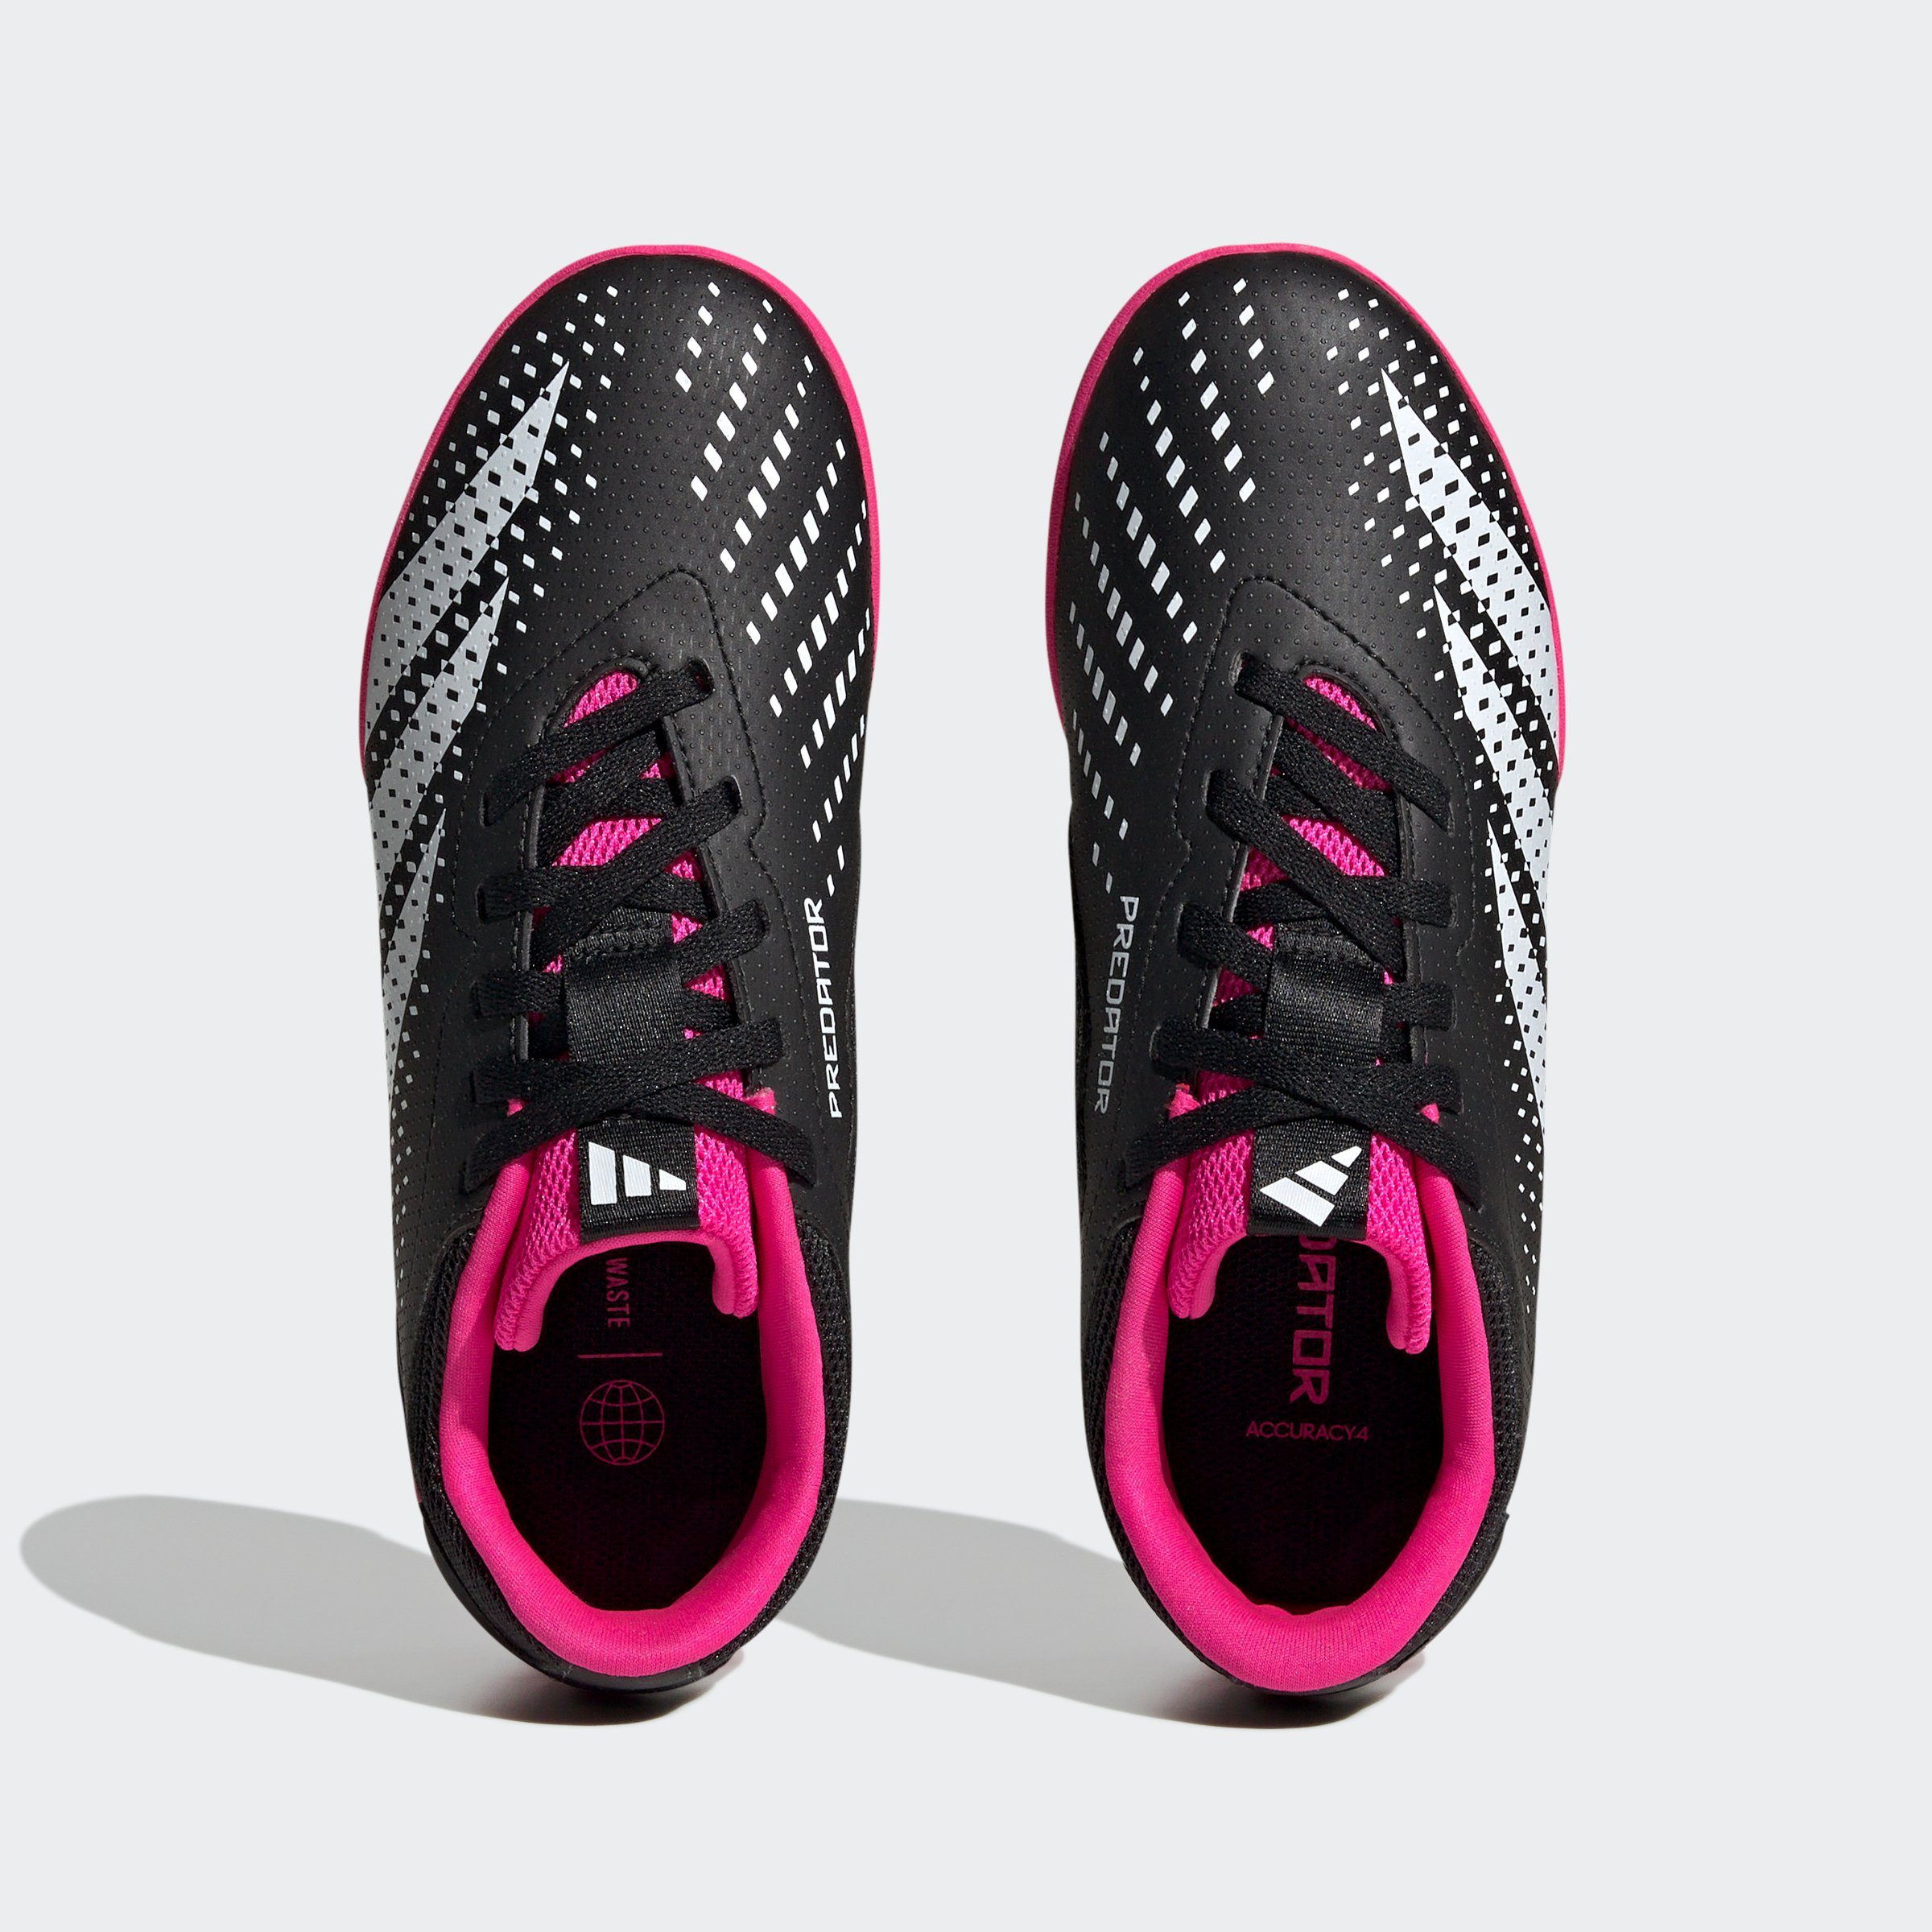 ACCURACY.4 Black Core adidas Fußballschuh / Pink Shock Performance Team PREDATOR Cloud IN 2 / SALA White